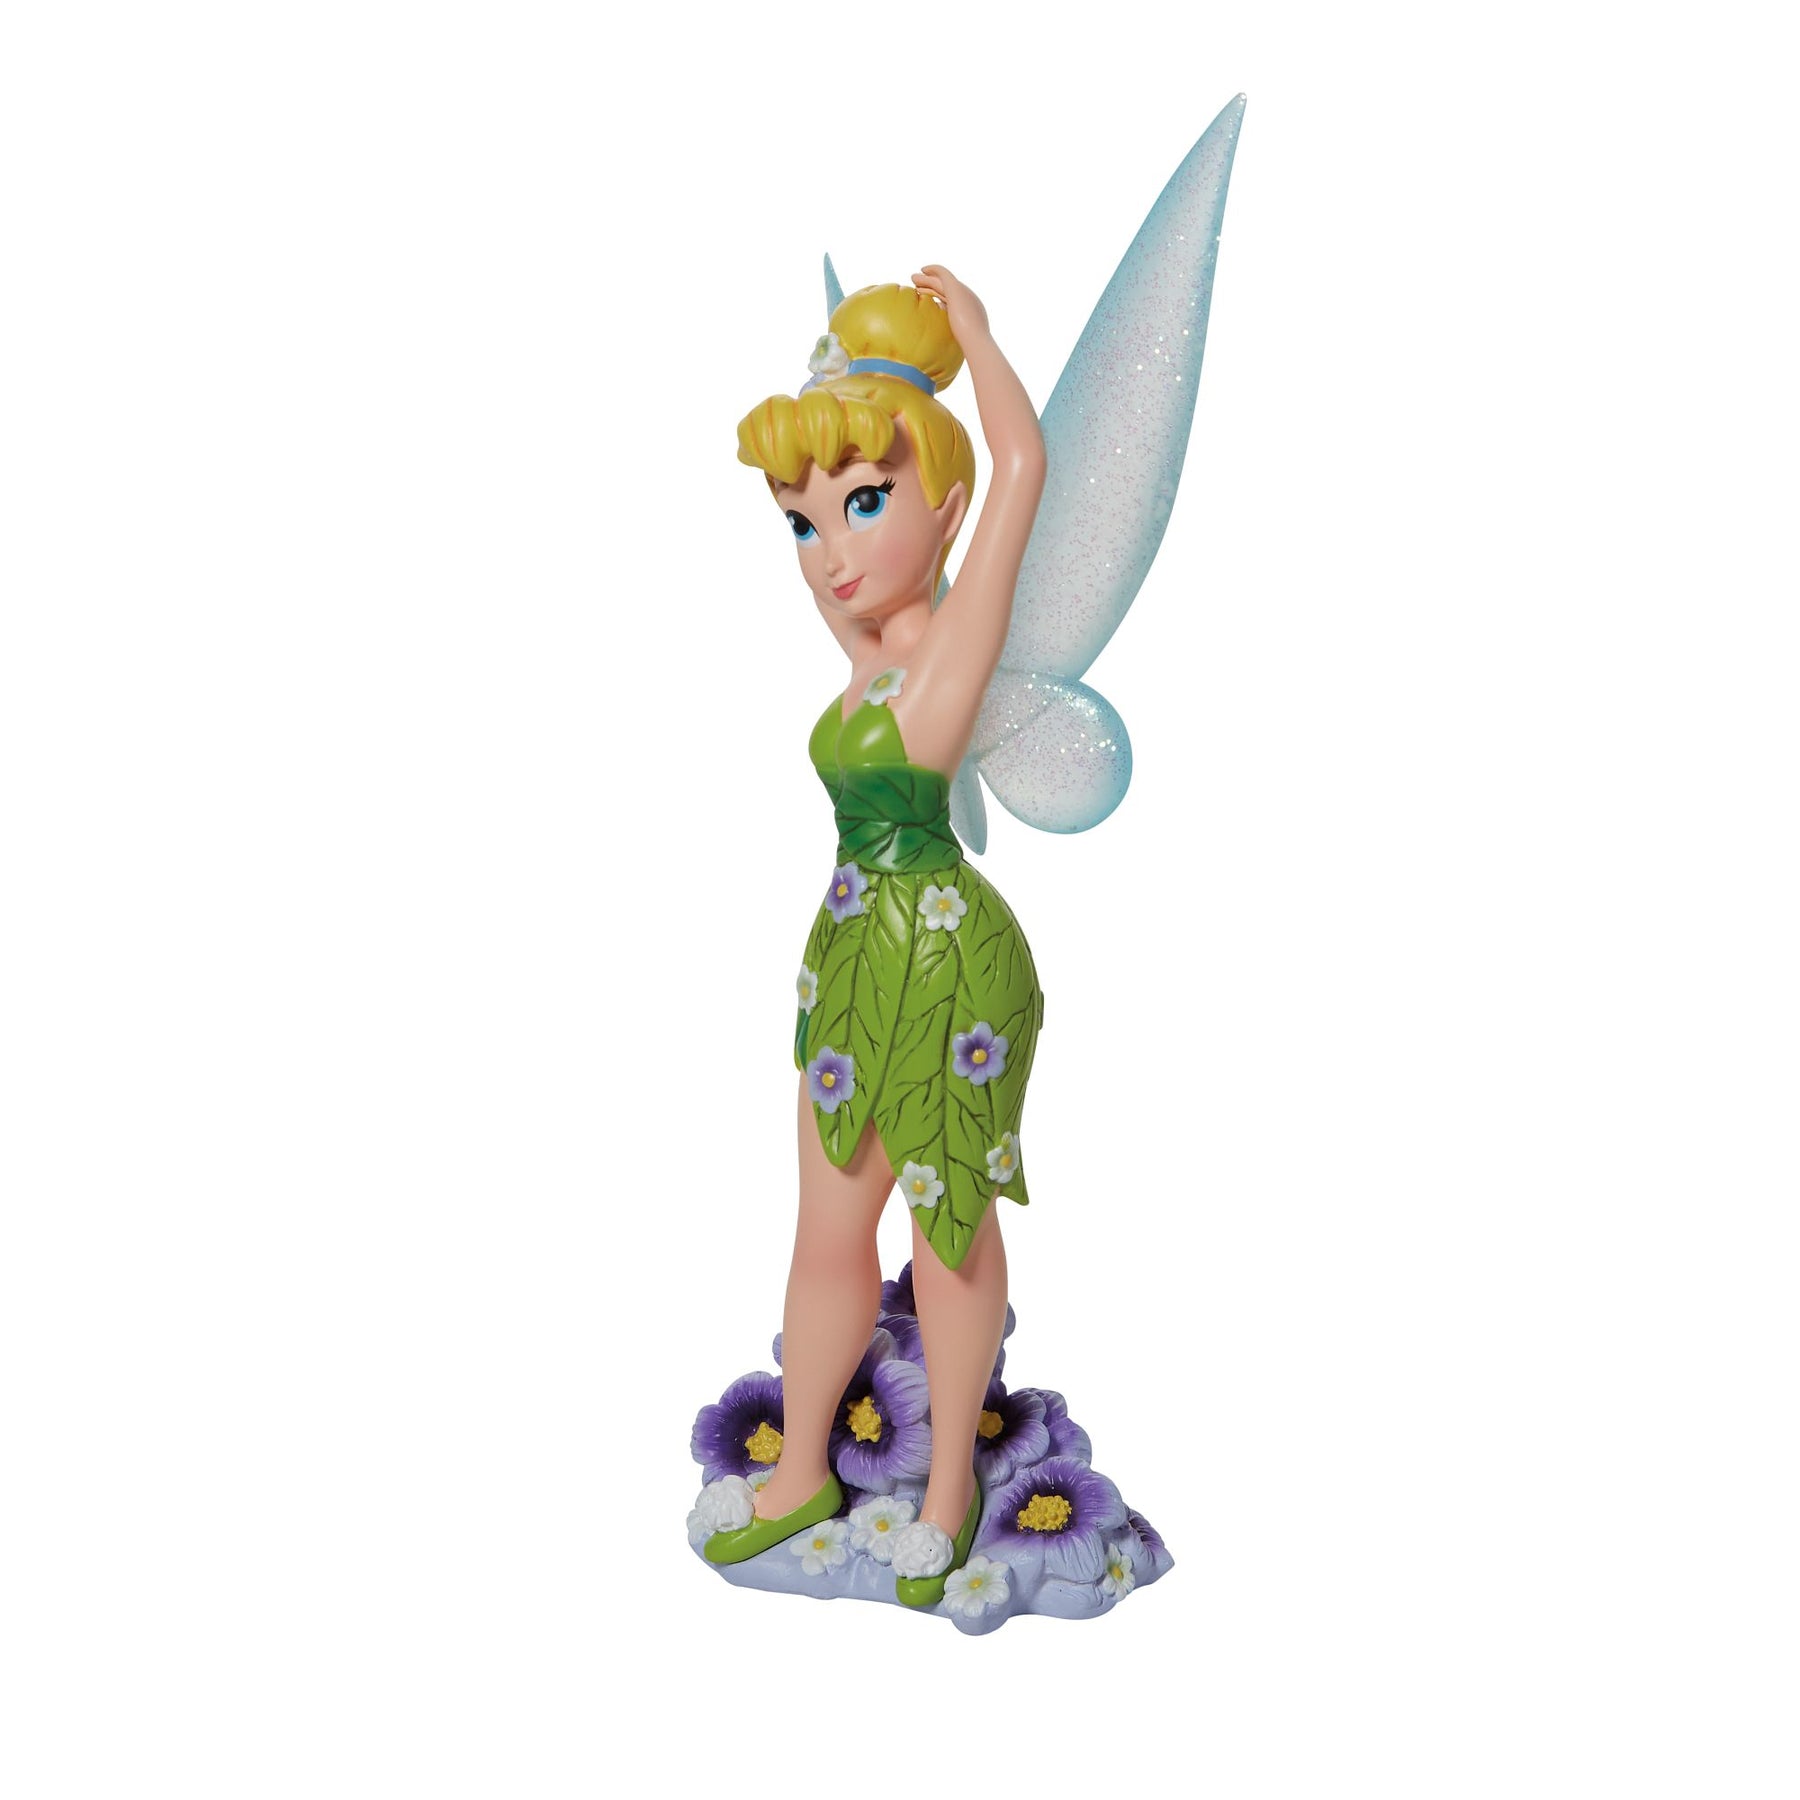 Disney Showcase Figurine - Botanical Alice in Wonderland